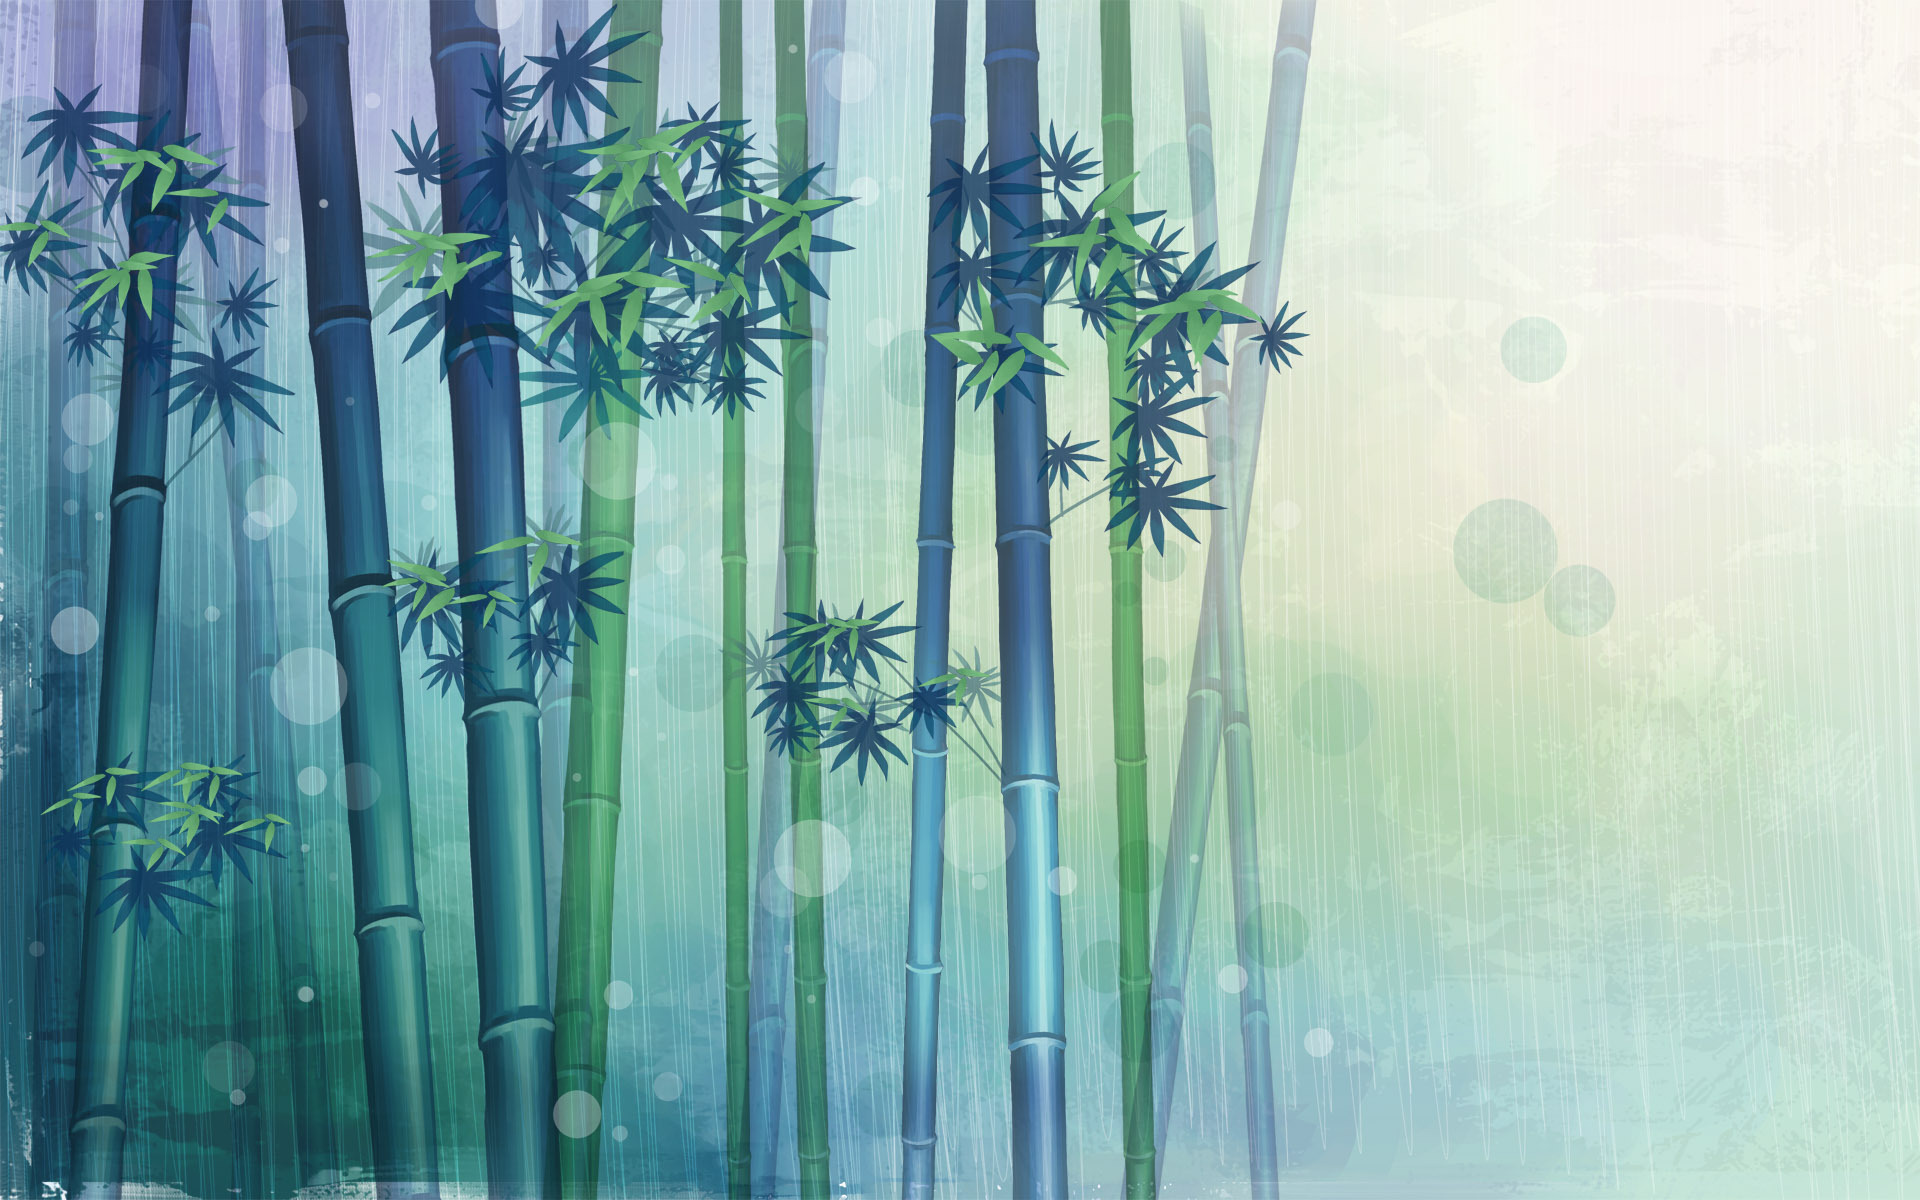 228629 descargar imagen tierra/naturaleza, bambú: fondos de pantalla y protectores de pantalla gratis